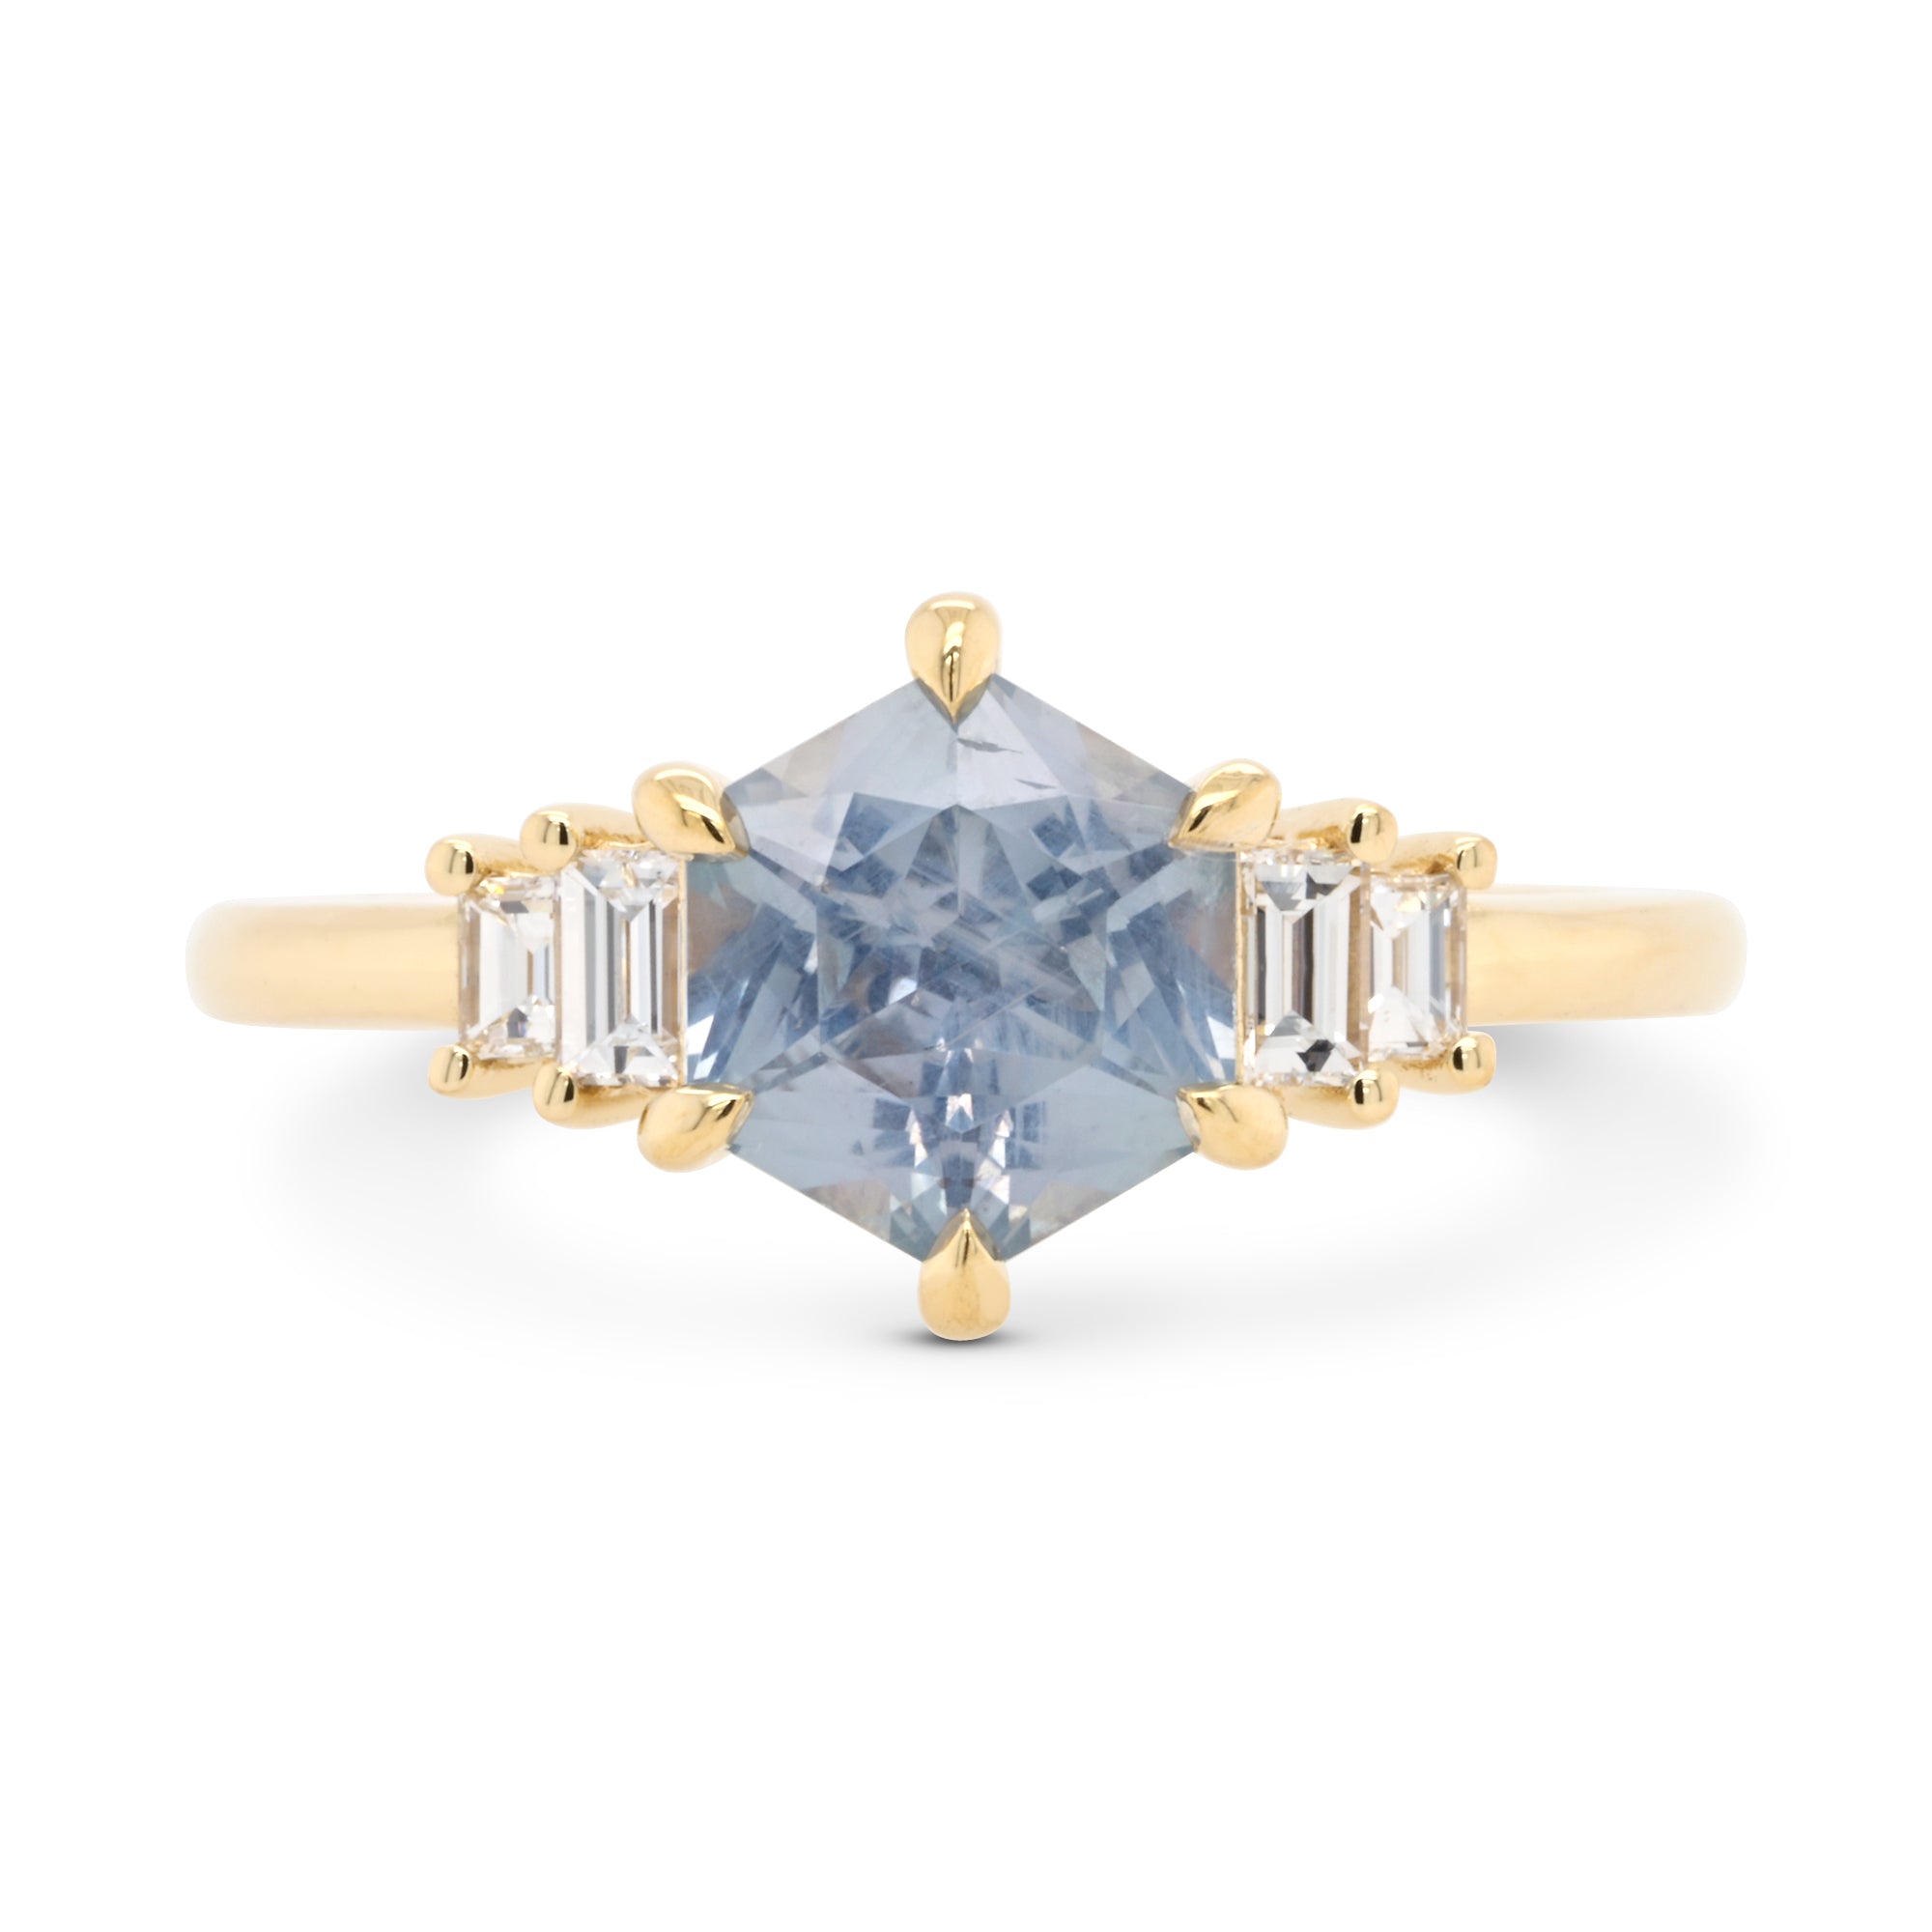 Montana hexagon sapphire engagement ring with baguette diamonds